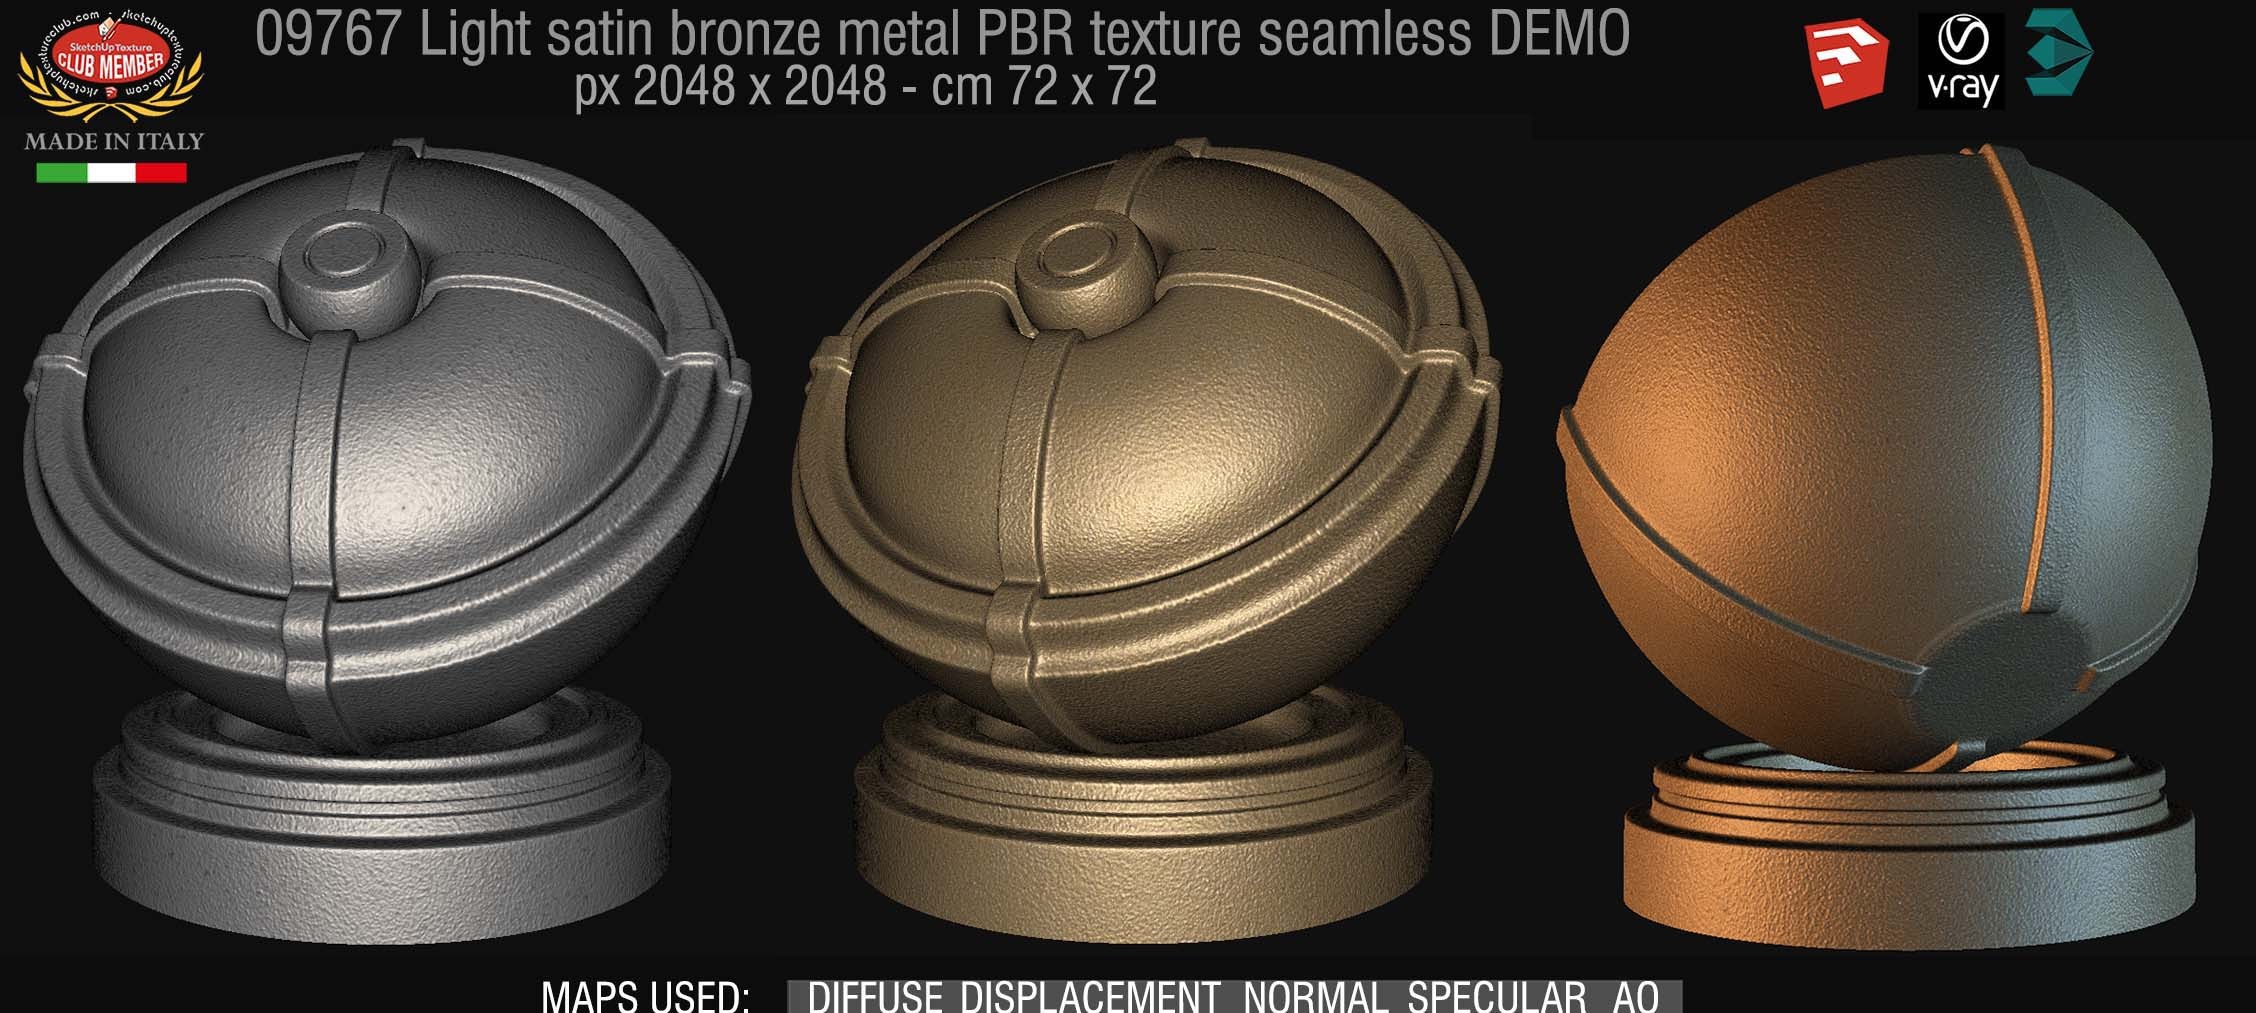 09767 Light satin bronze metal PBR texture seamless DEMO